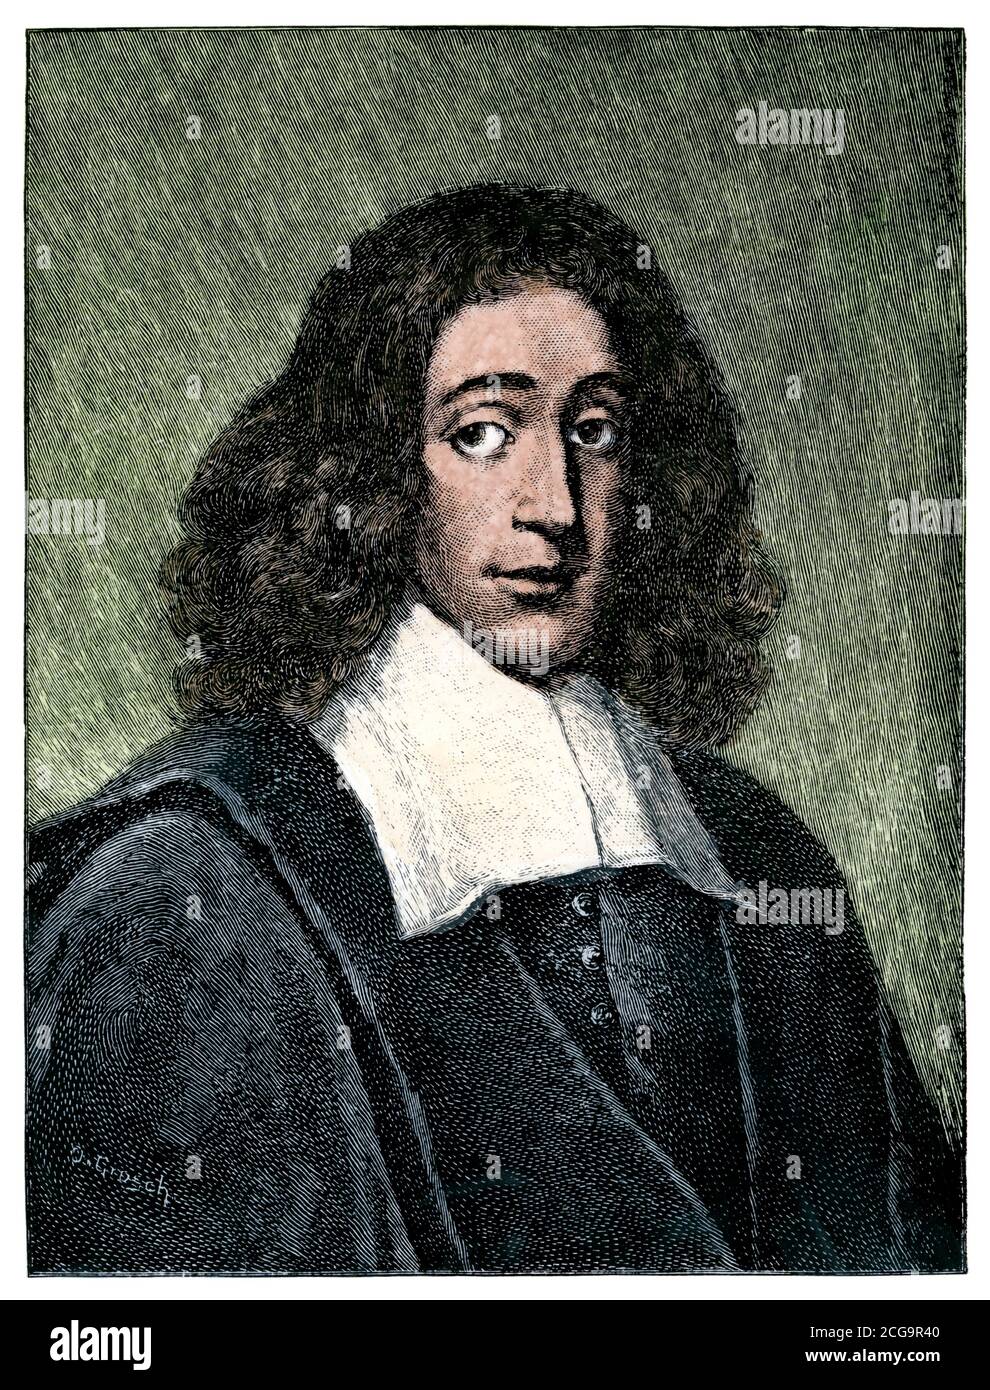 Baruch Spinoza Hand-colored engraving Stock Photo